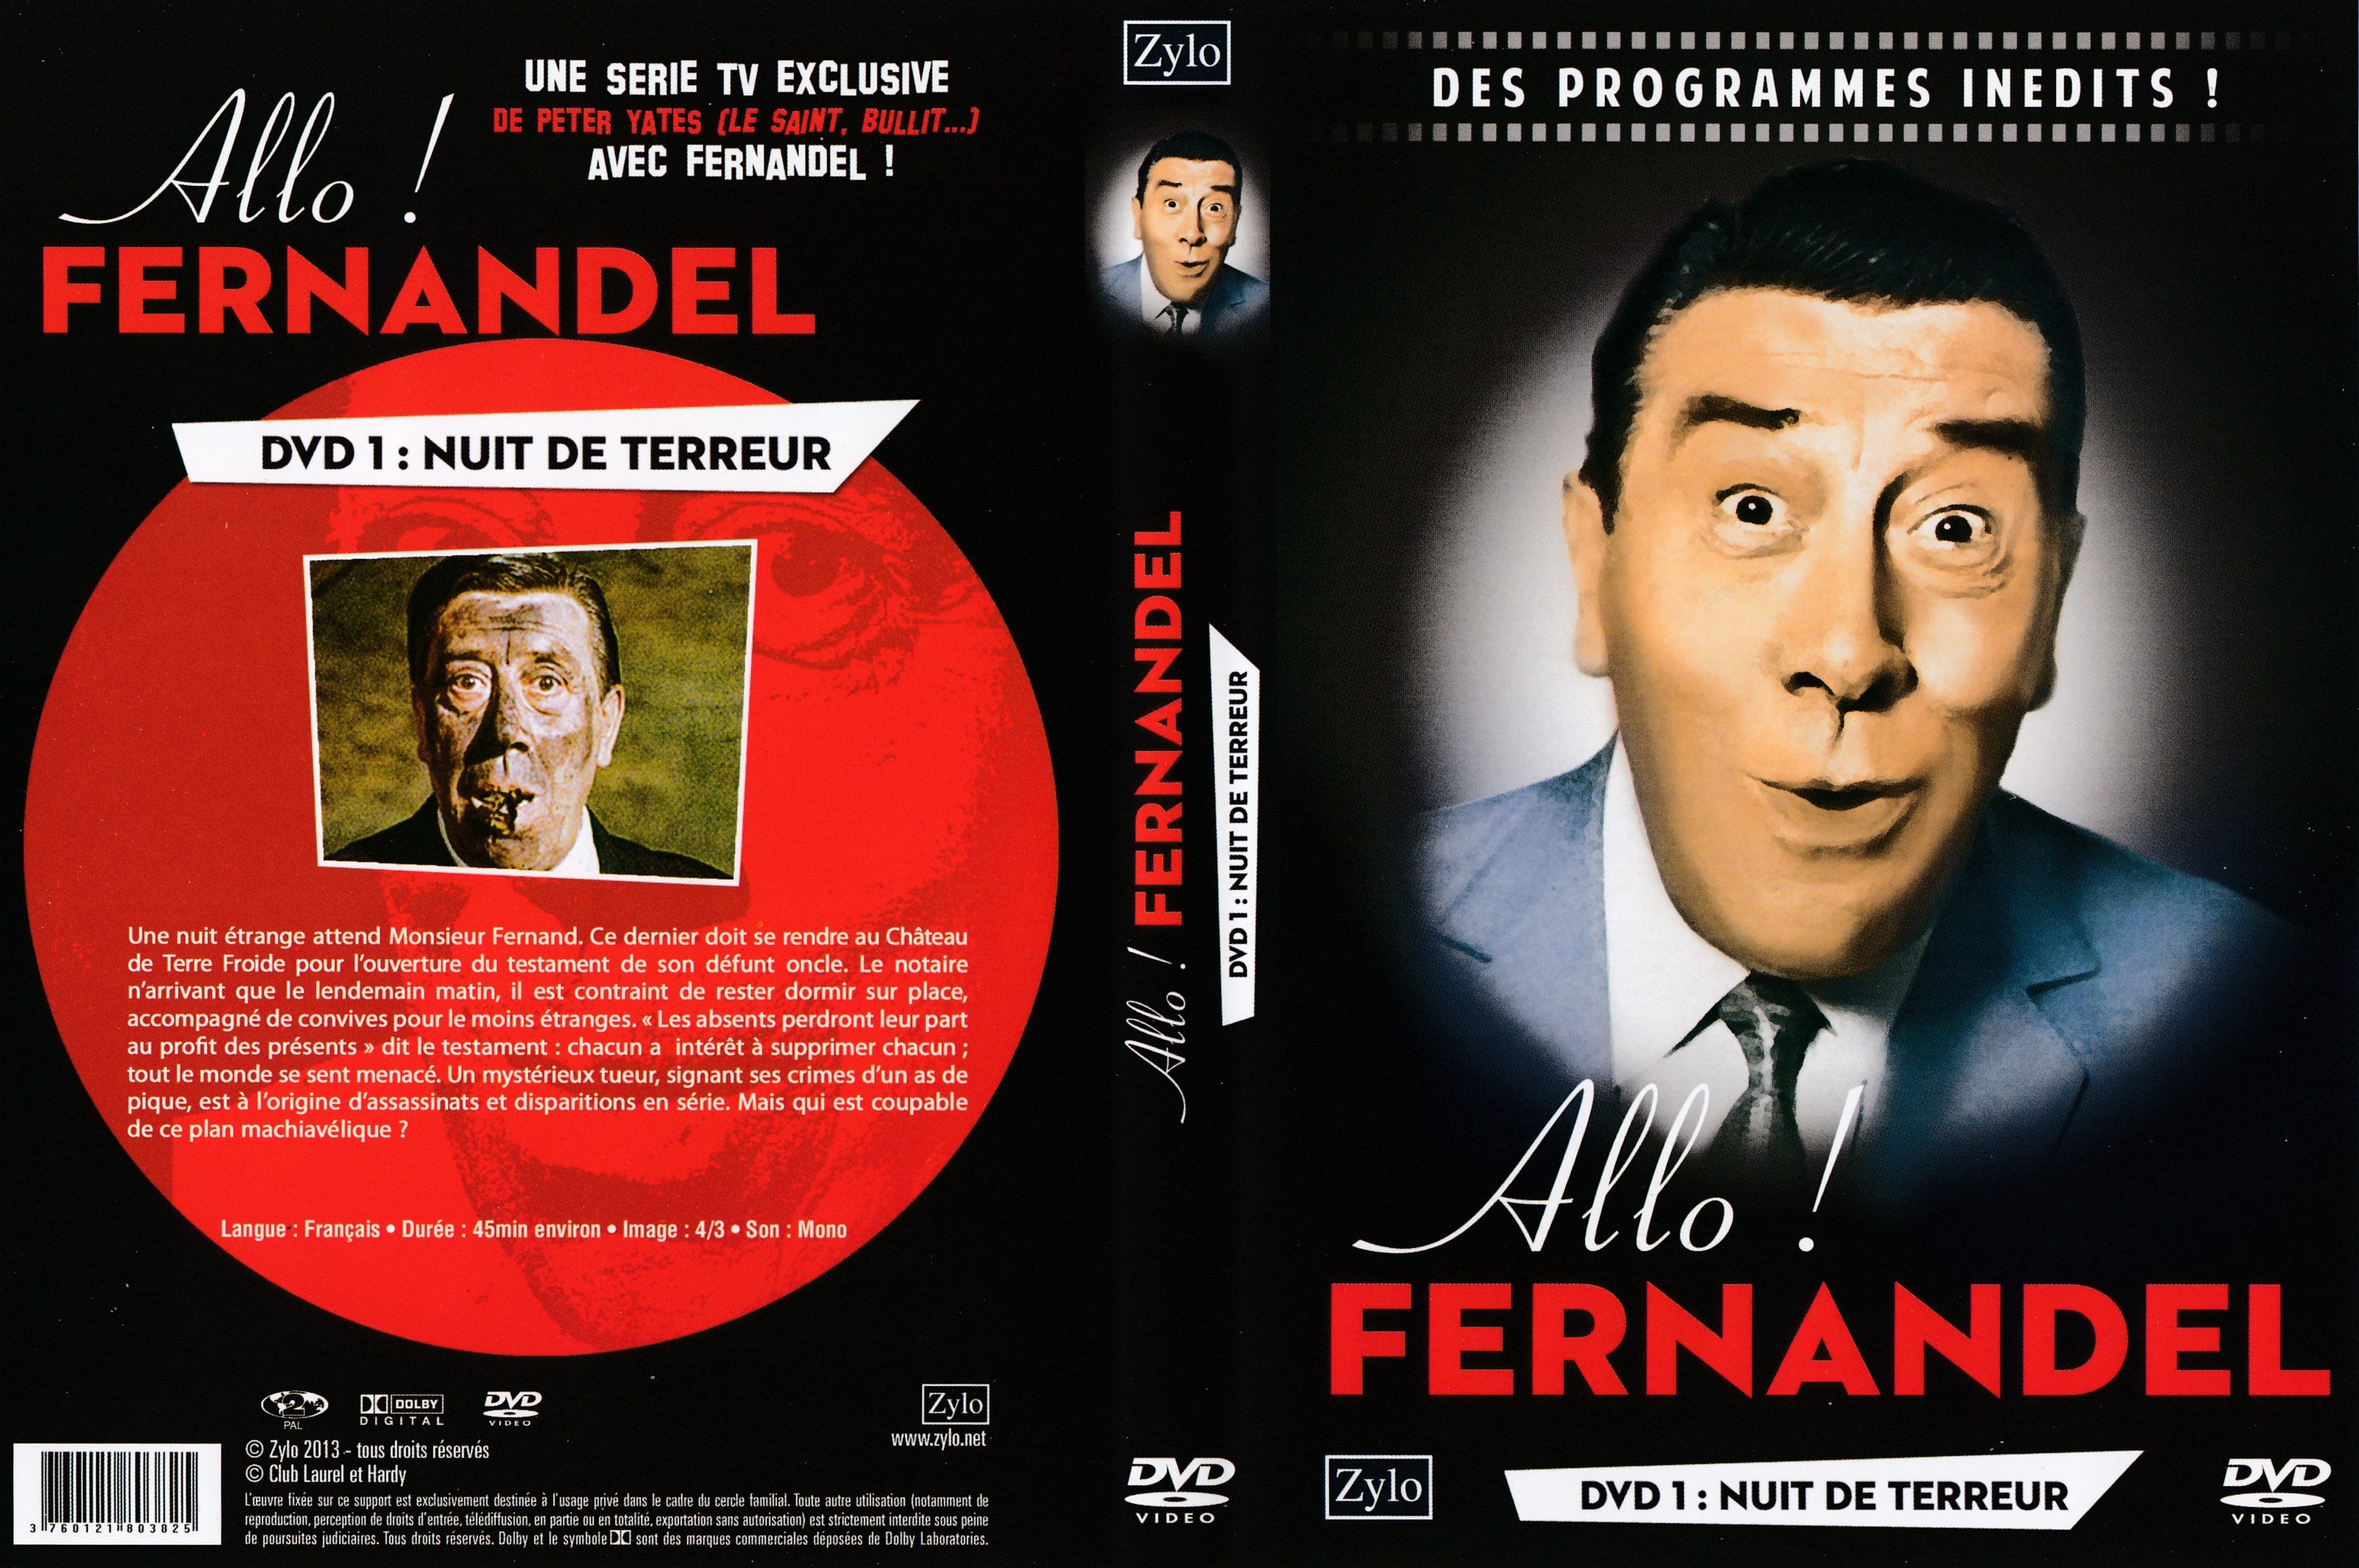 Jaquette DVD llo Fernandel Nuit de terreur DVD 1